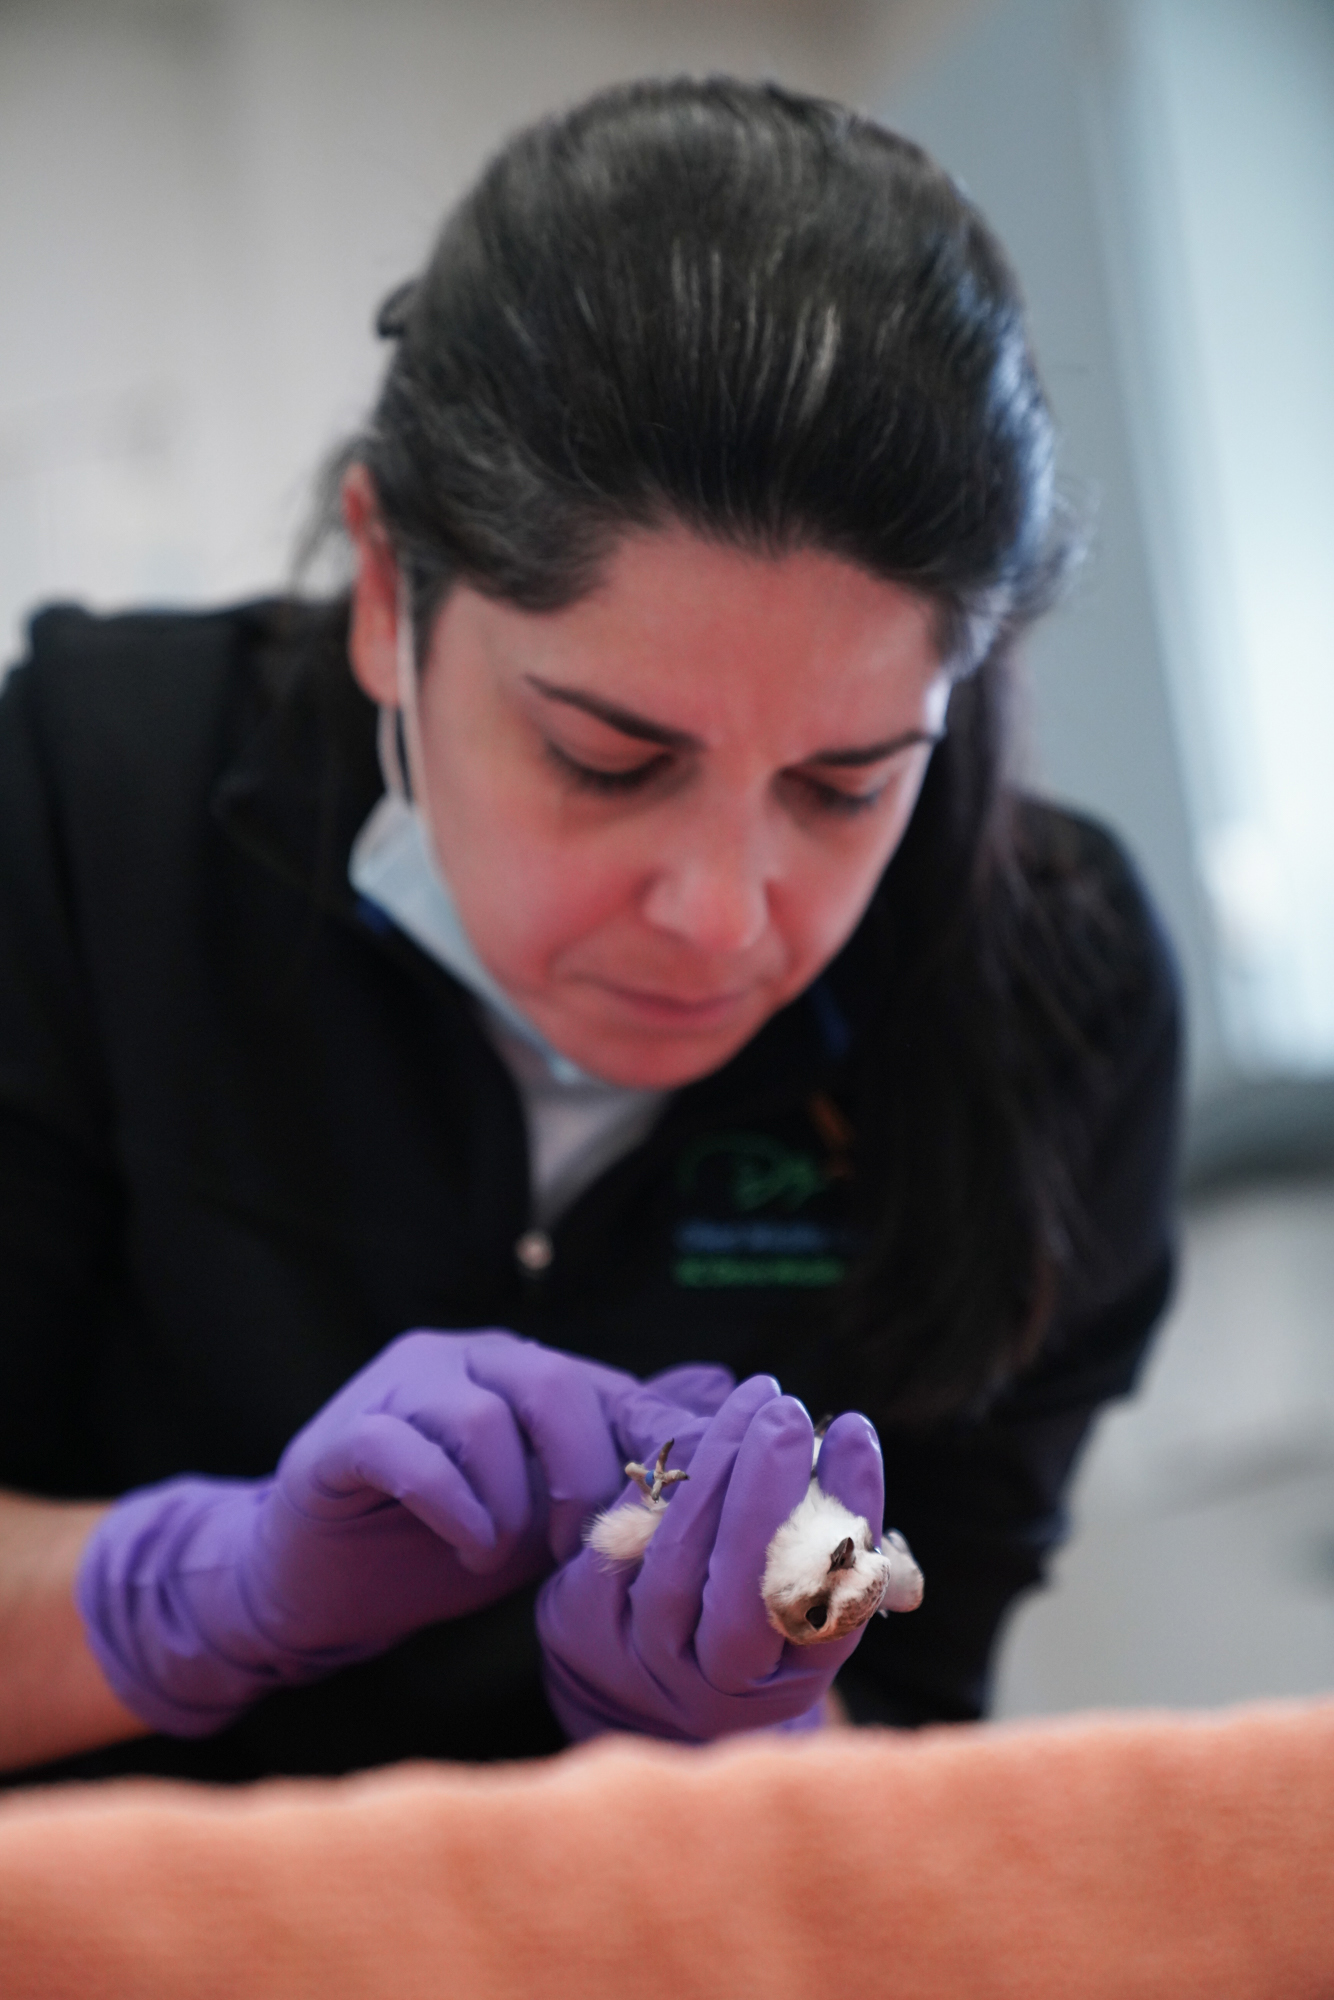 A veterinarian exams a small bird in her hands